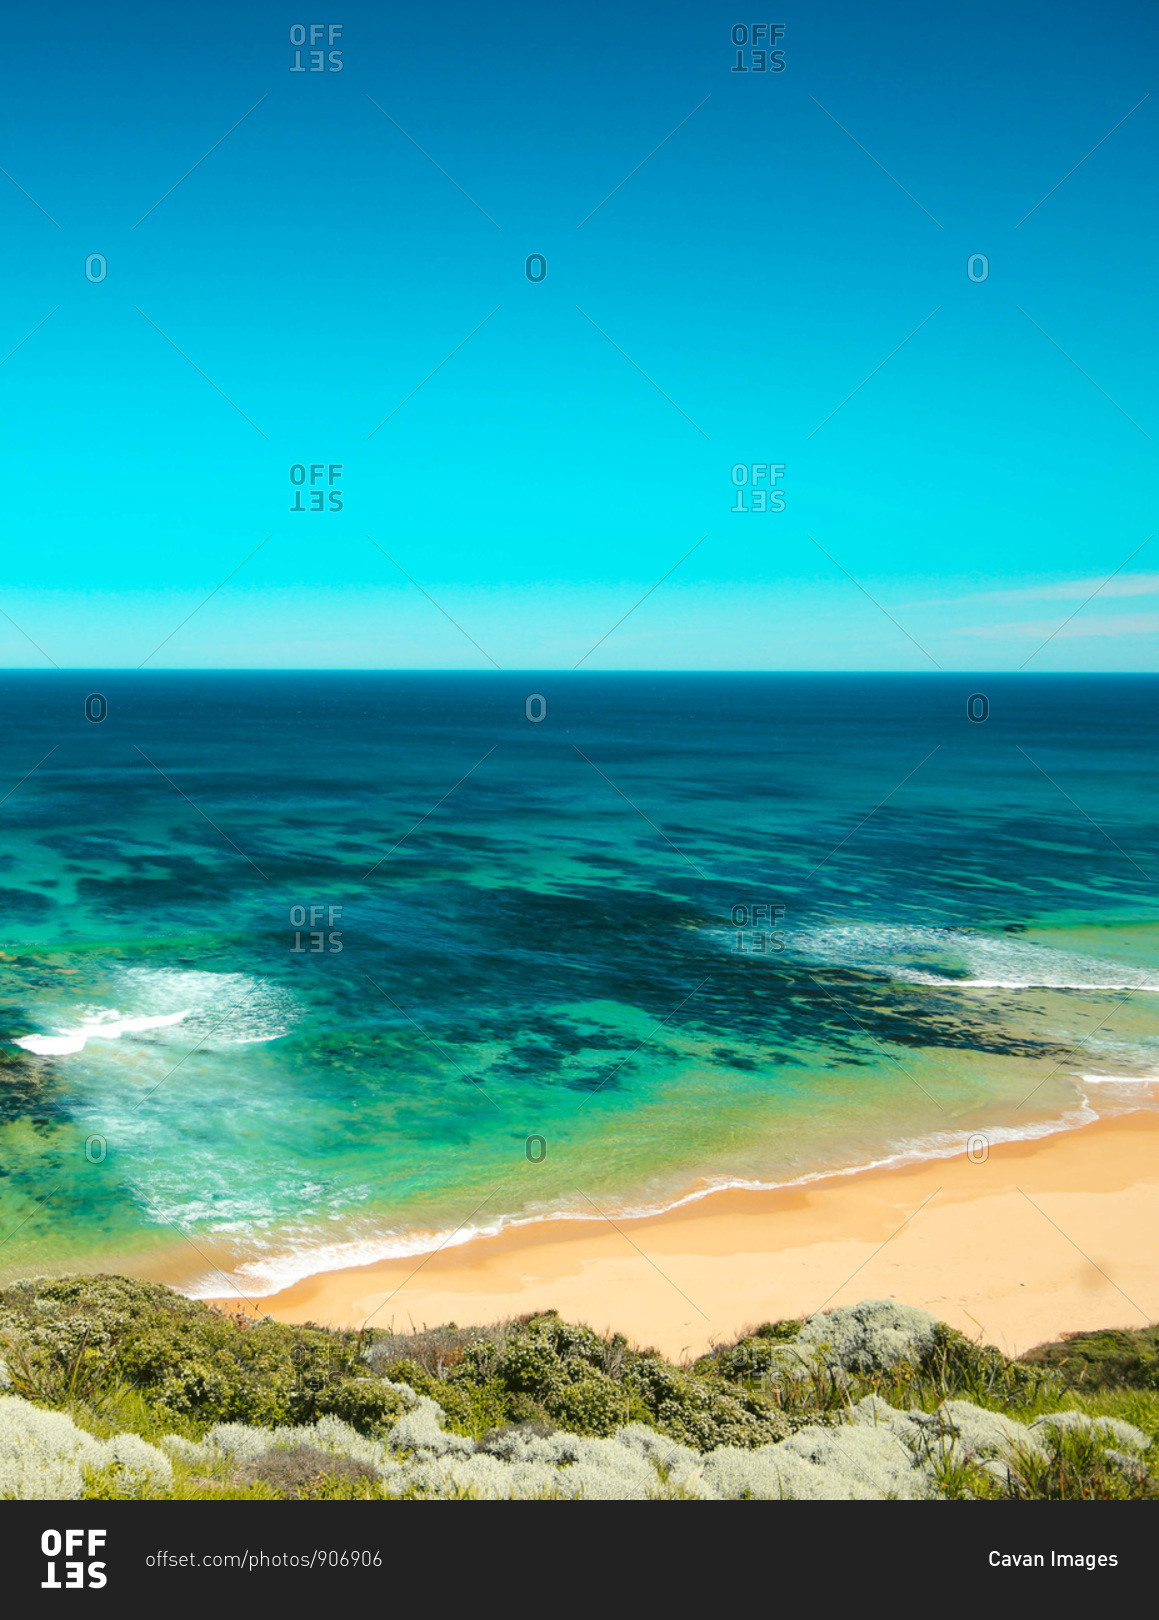 Ocean reef on Great Ocean Road, Australia during bright summers day